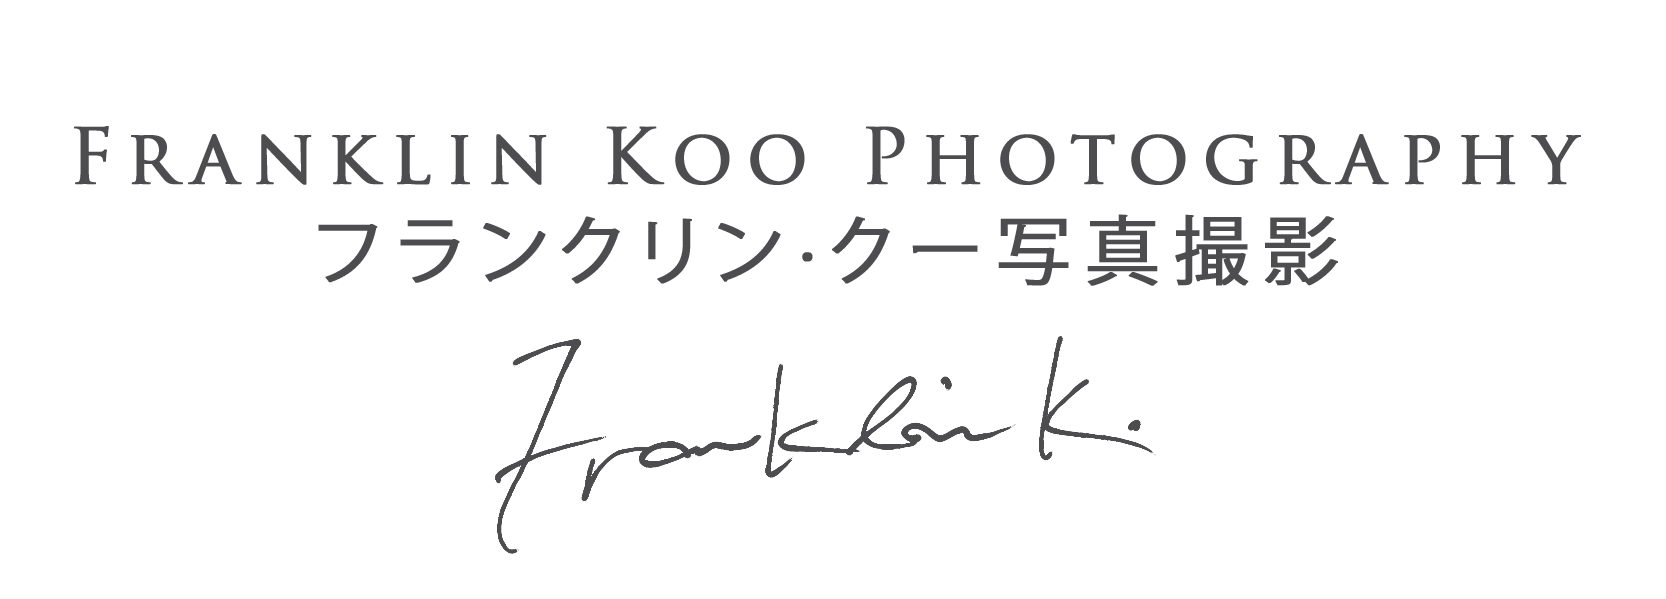 Franklin Koo Photography